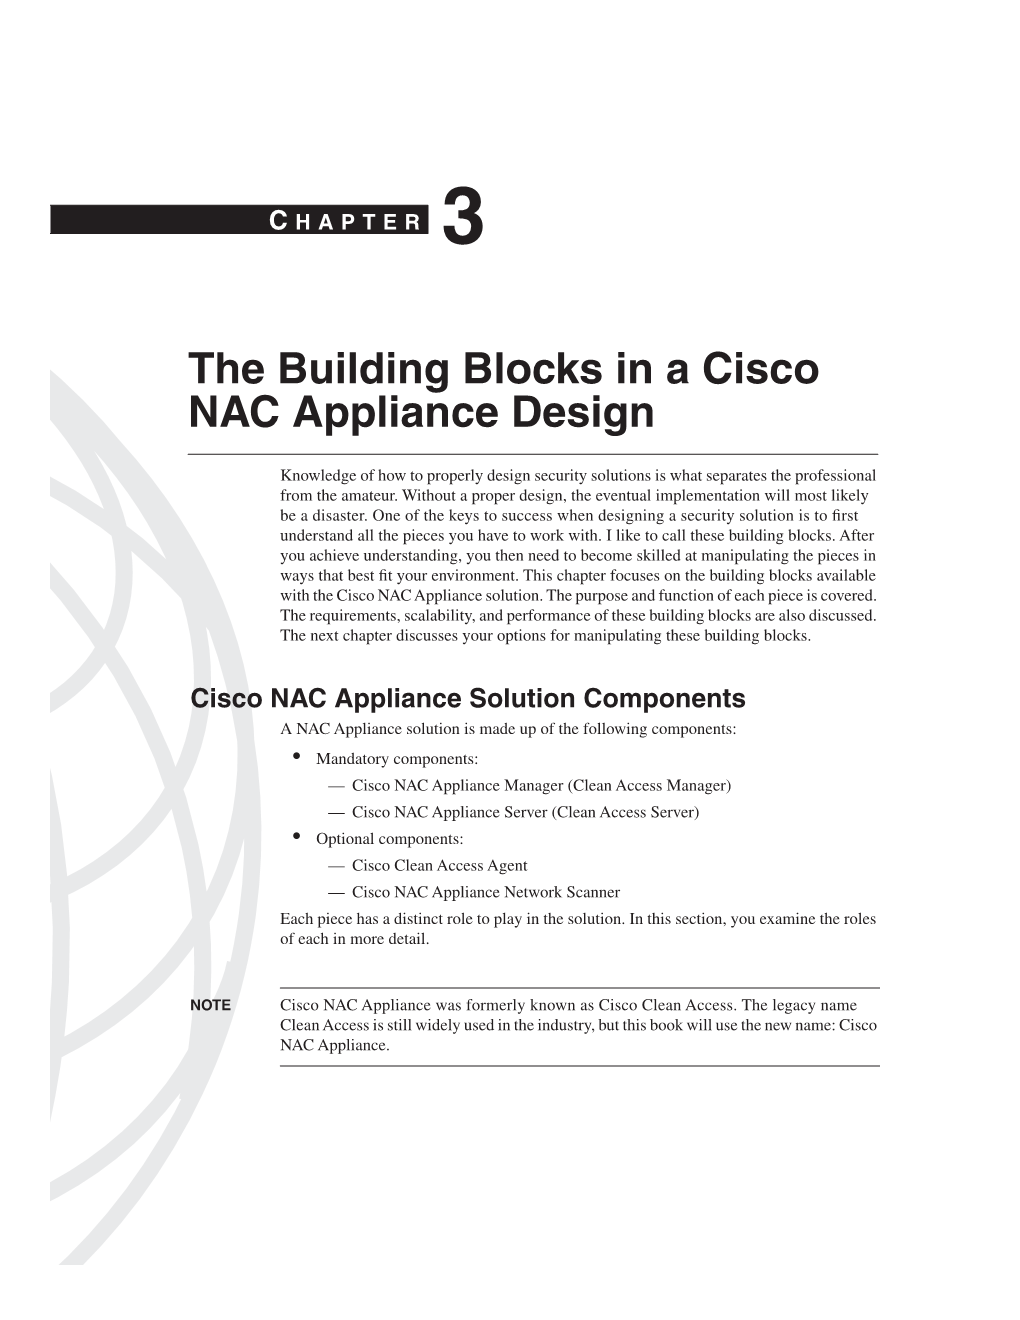 The Building Blocks in a Cisco NAC Appliance Design